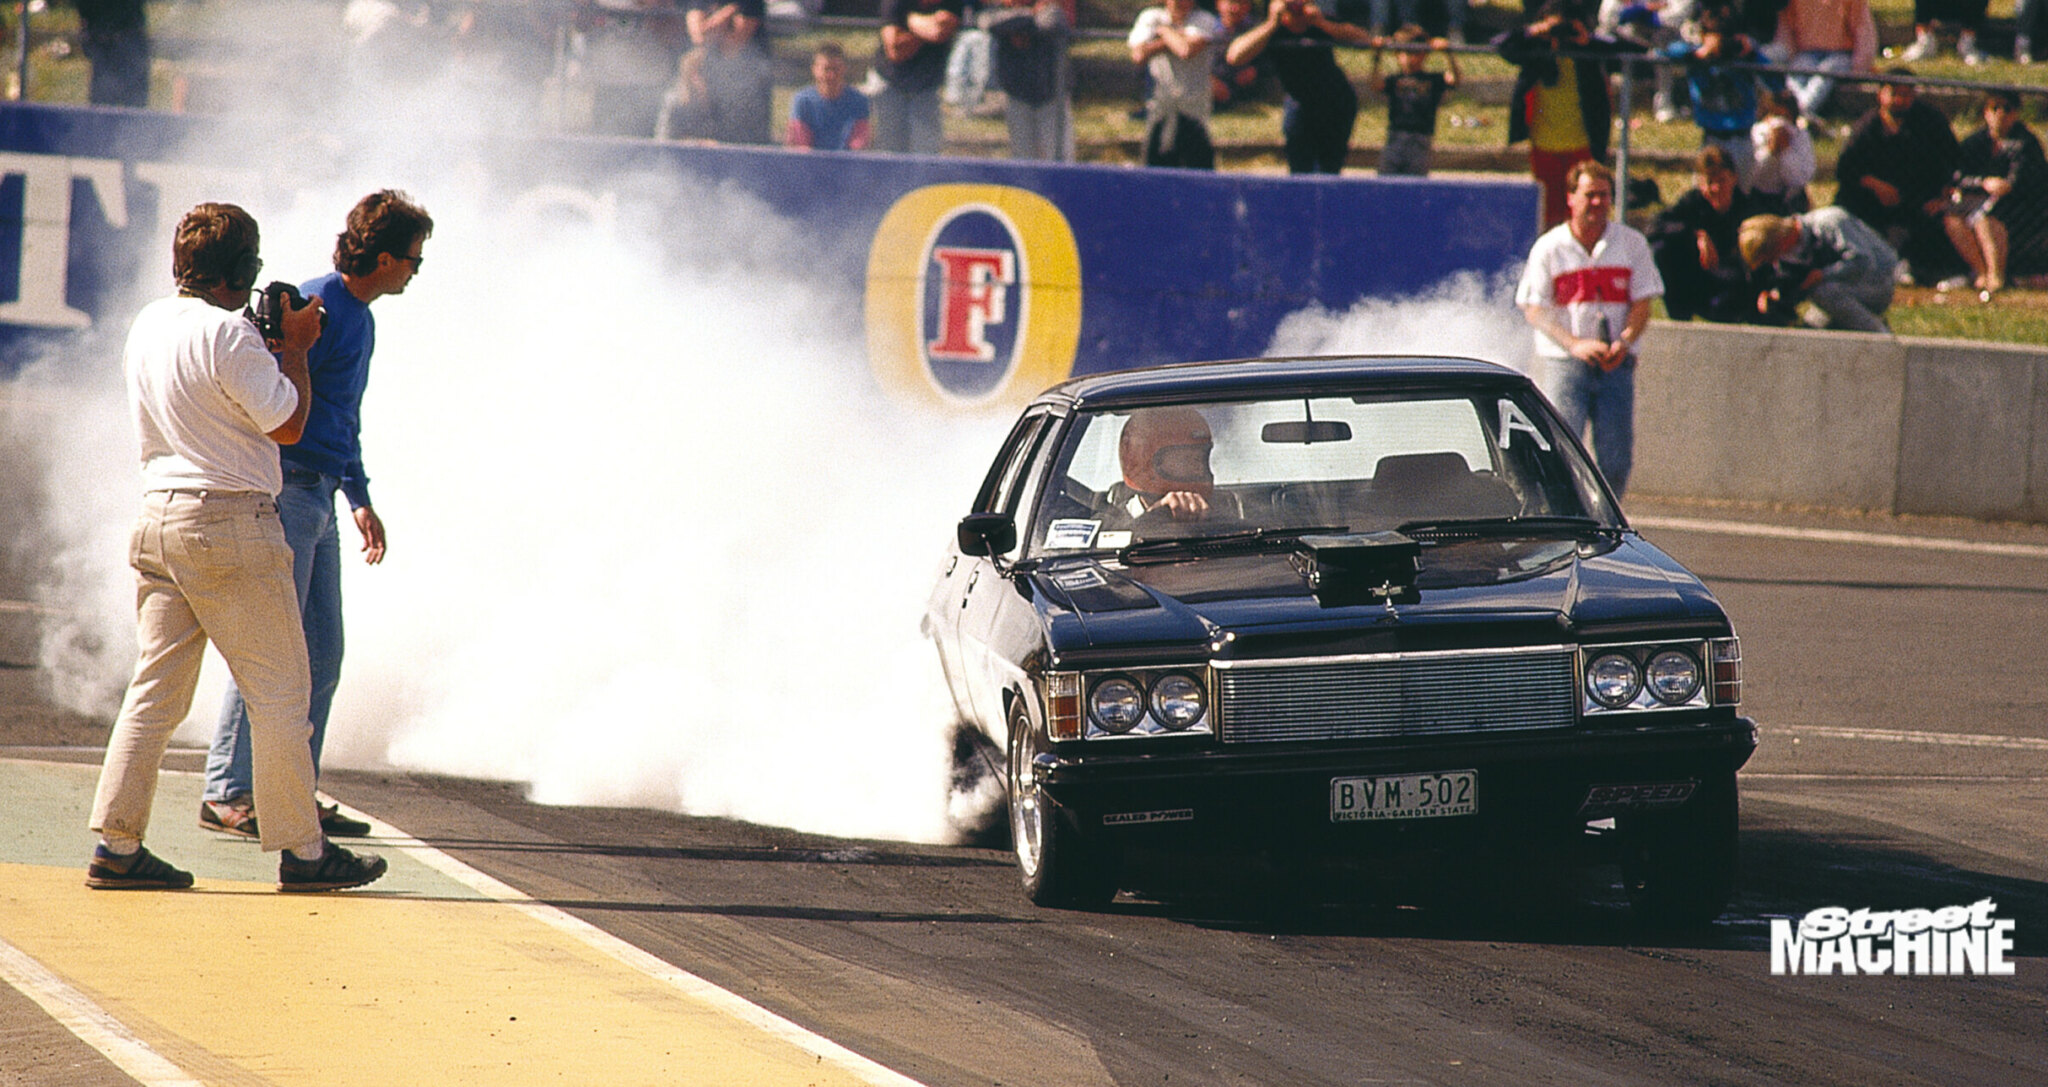 The Speed Pro HJ Holden: Winner of the 1990 Street Machine Drag Racing Championship